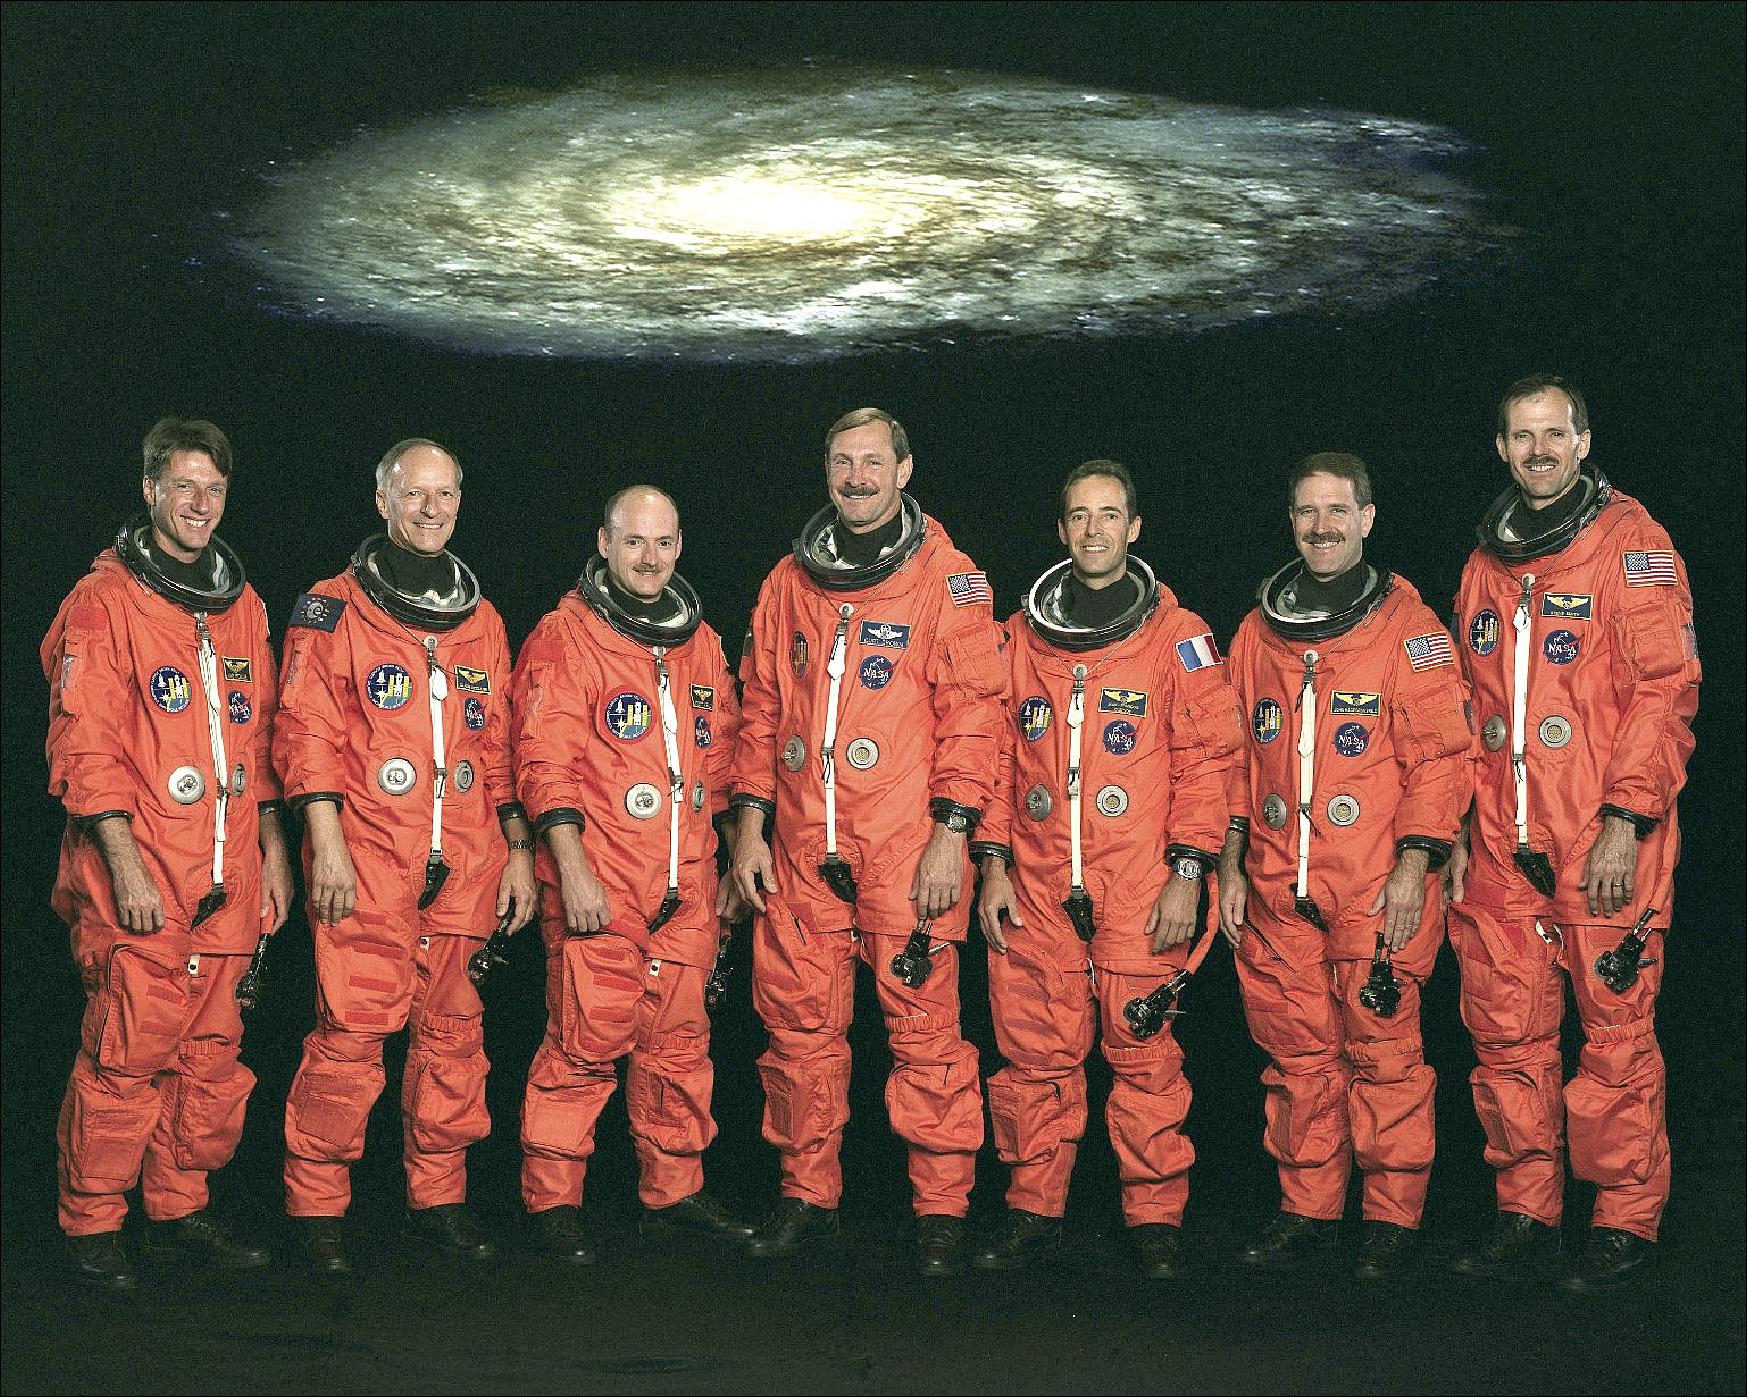 Figure 58: STS-103 Crew photo with Commander Curtis L. Brown, Pilot Scott J. Kelly, Mission Specialists Steven L. Smith, C. Michael Foale, John M. Grunsfeld, Claude Nicollier and Jean-Francois Clervoy (image credit: NASA) 86)